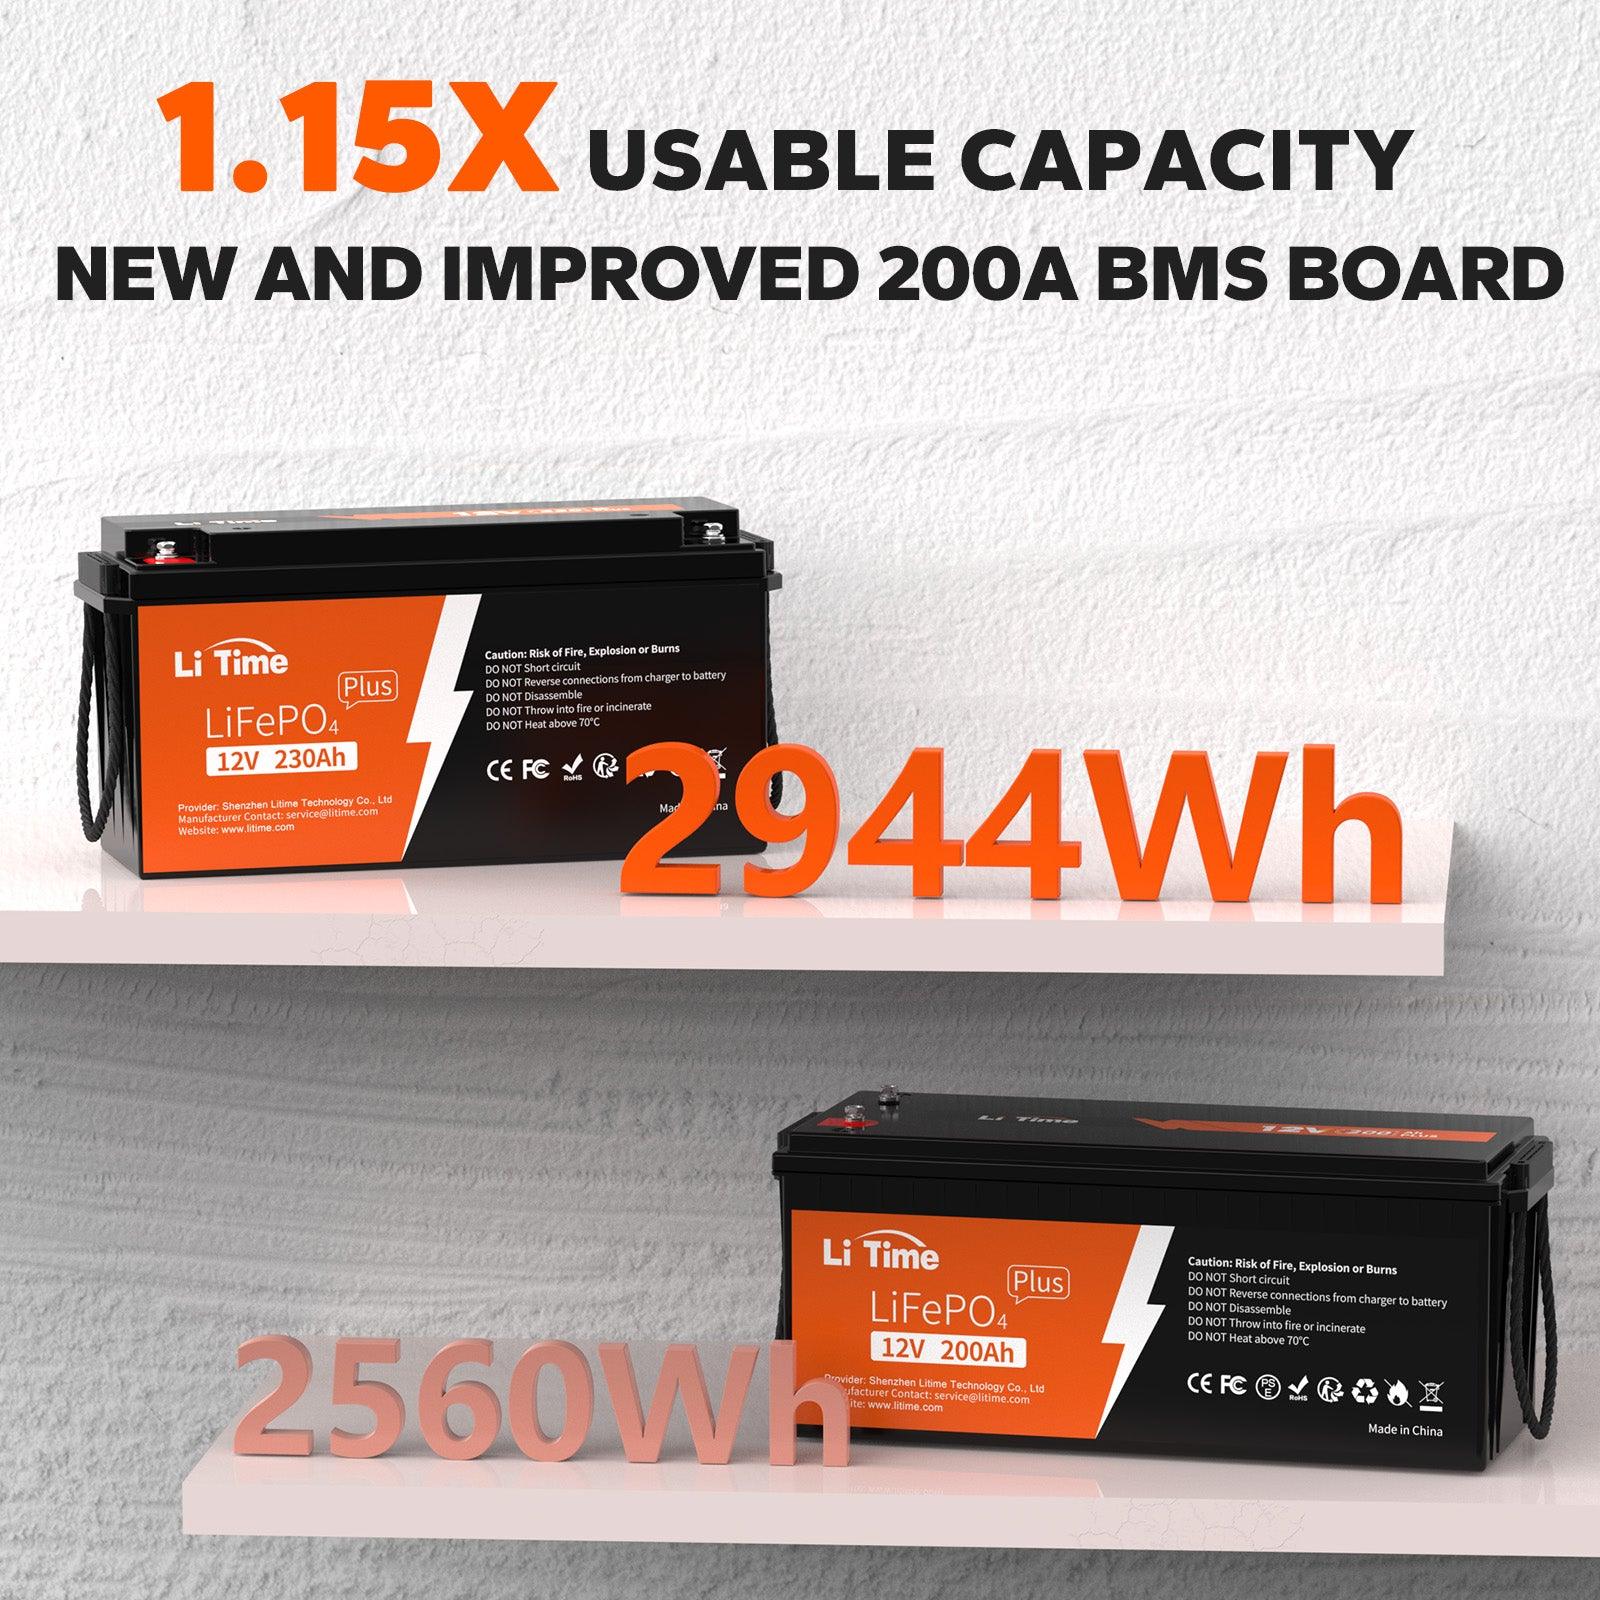 litime12v 230ah plus low temp protection lithium battery endless power